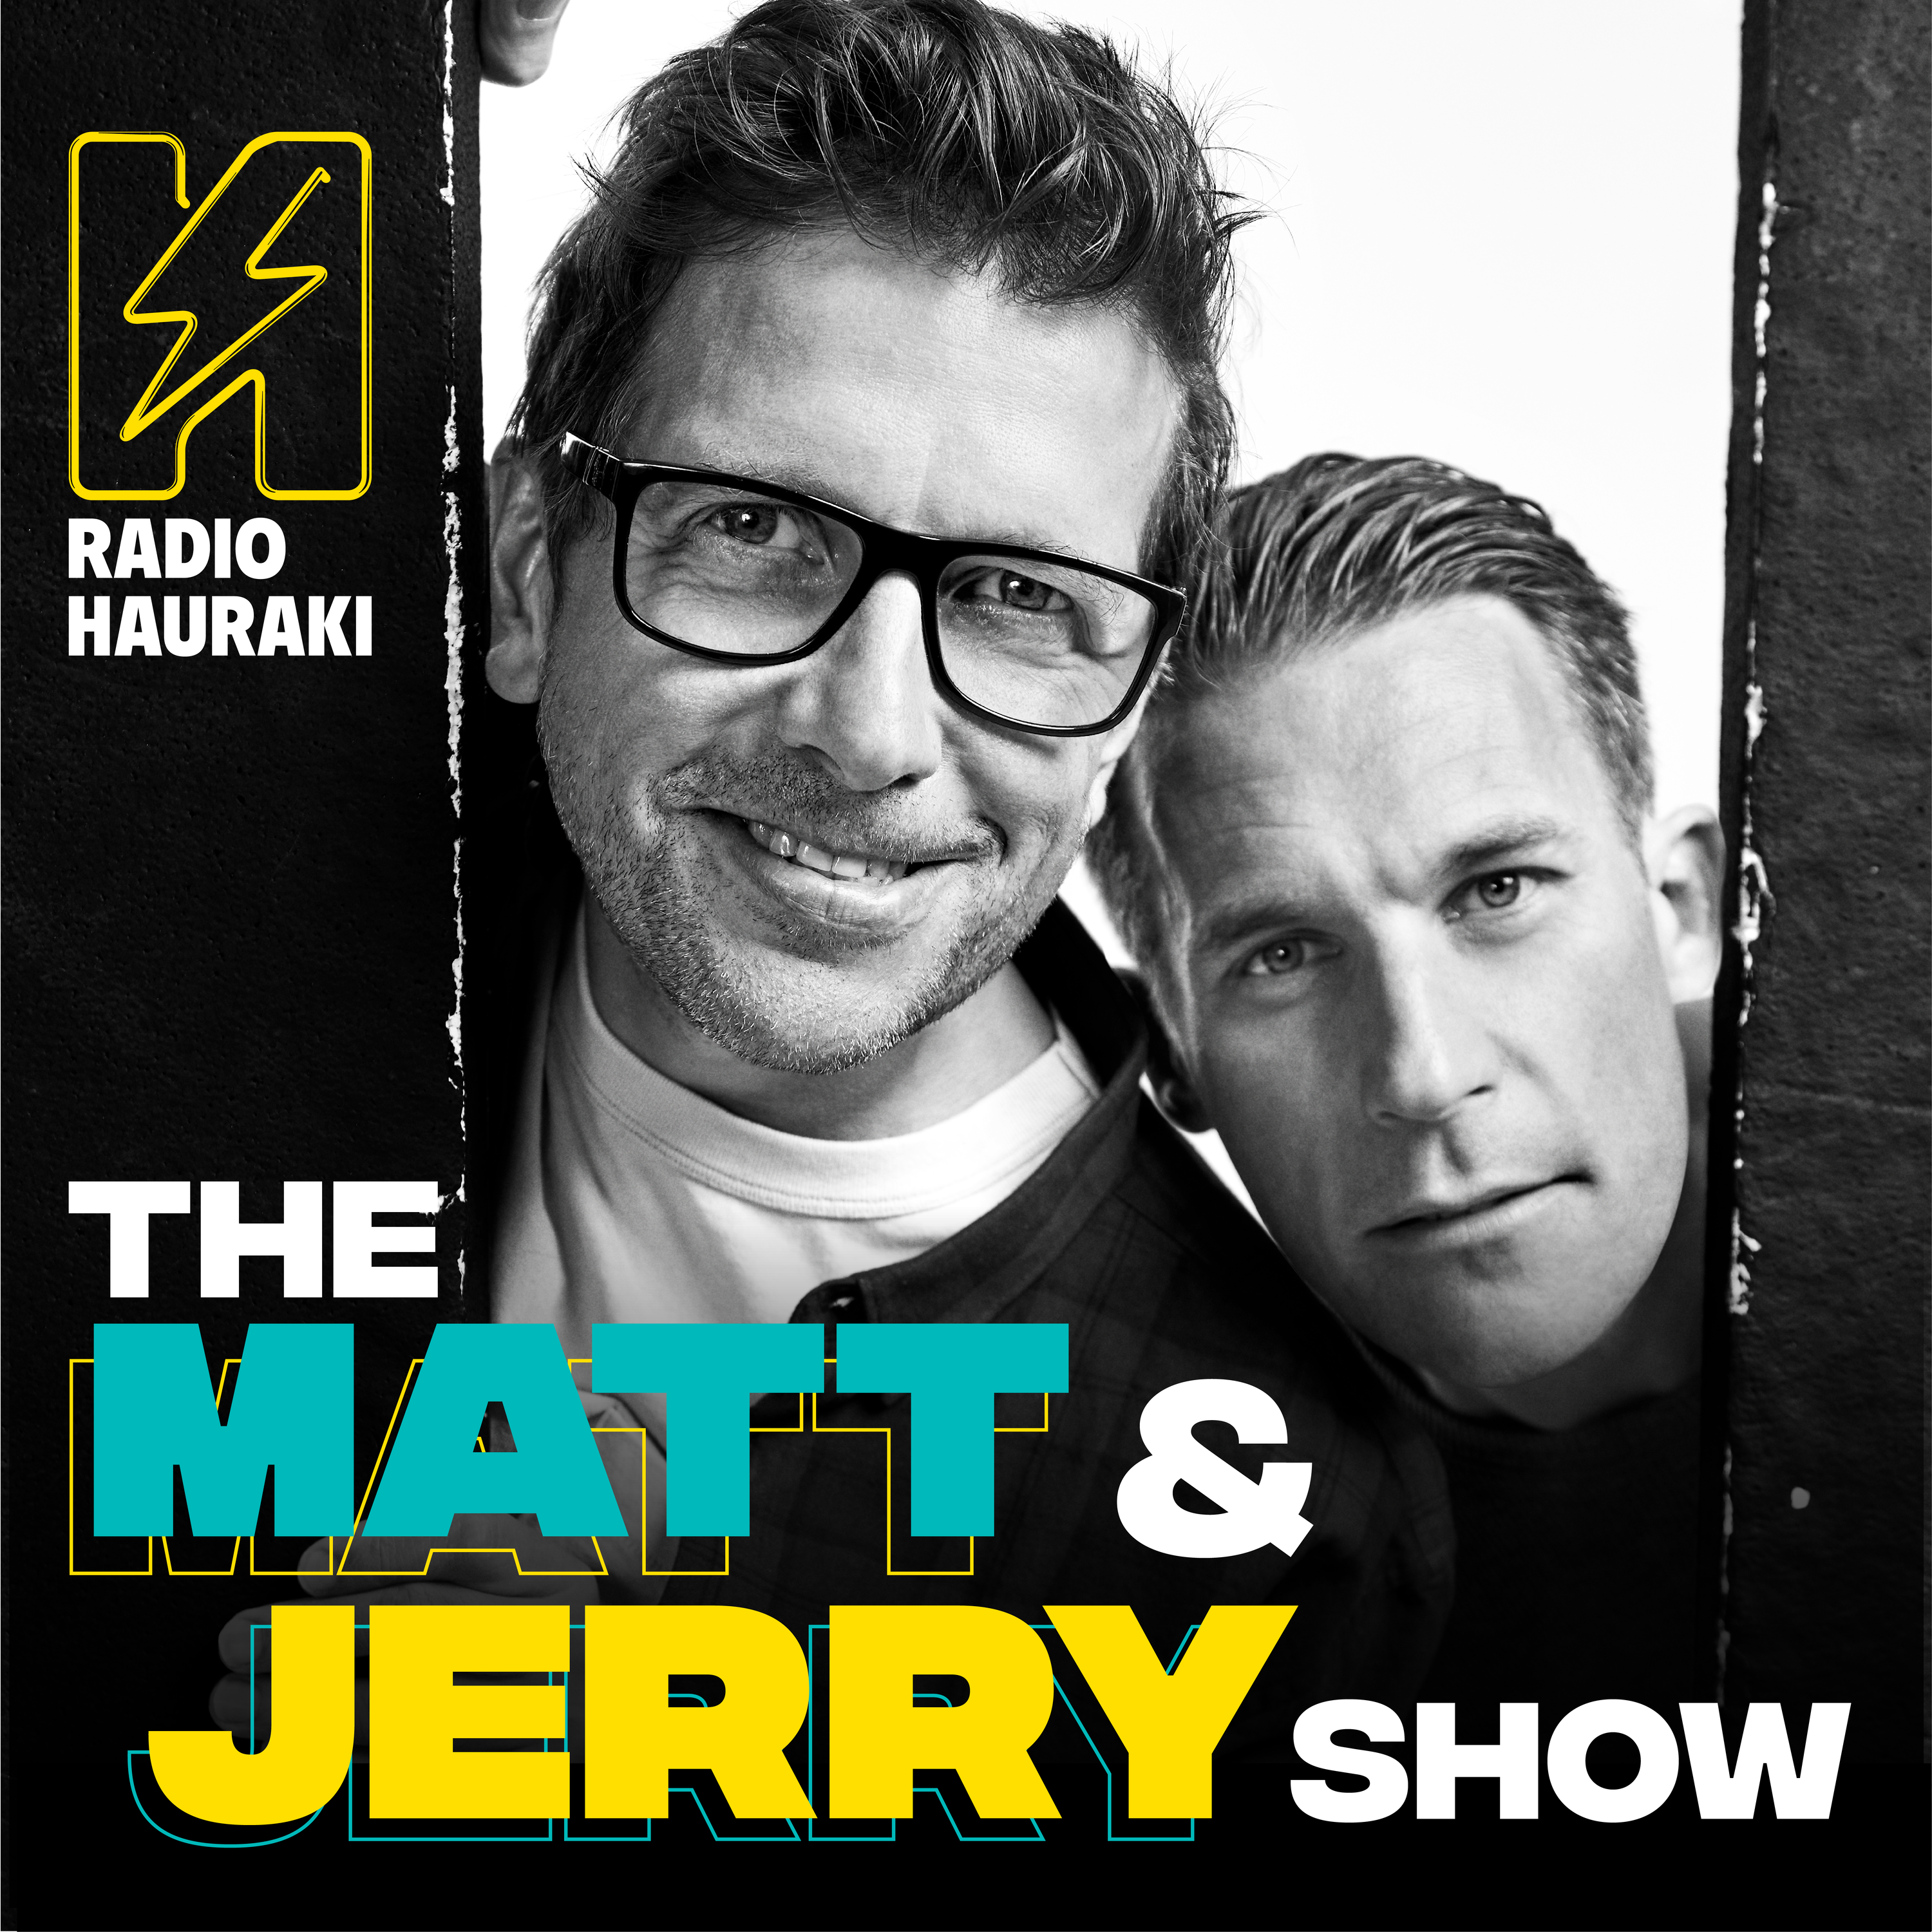 The Hauraki Shit Show - The Radio Highlights May 24